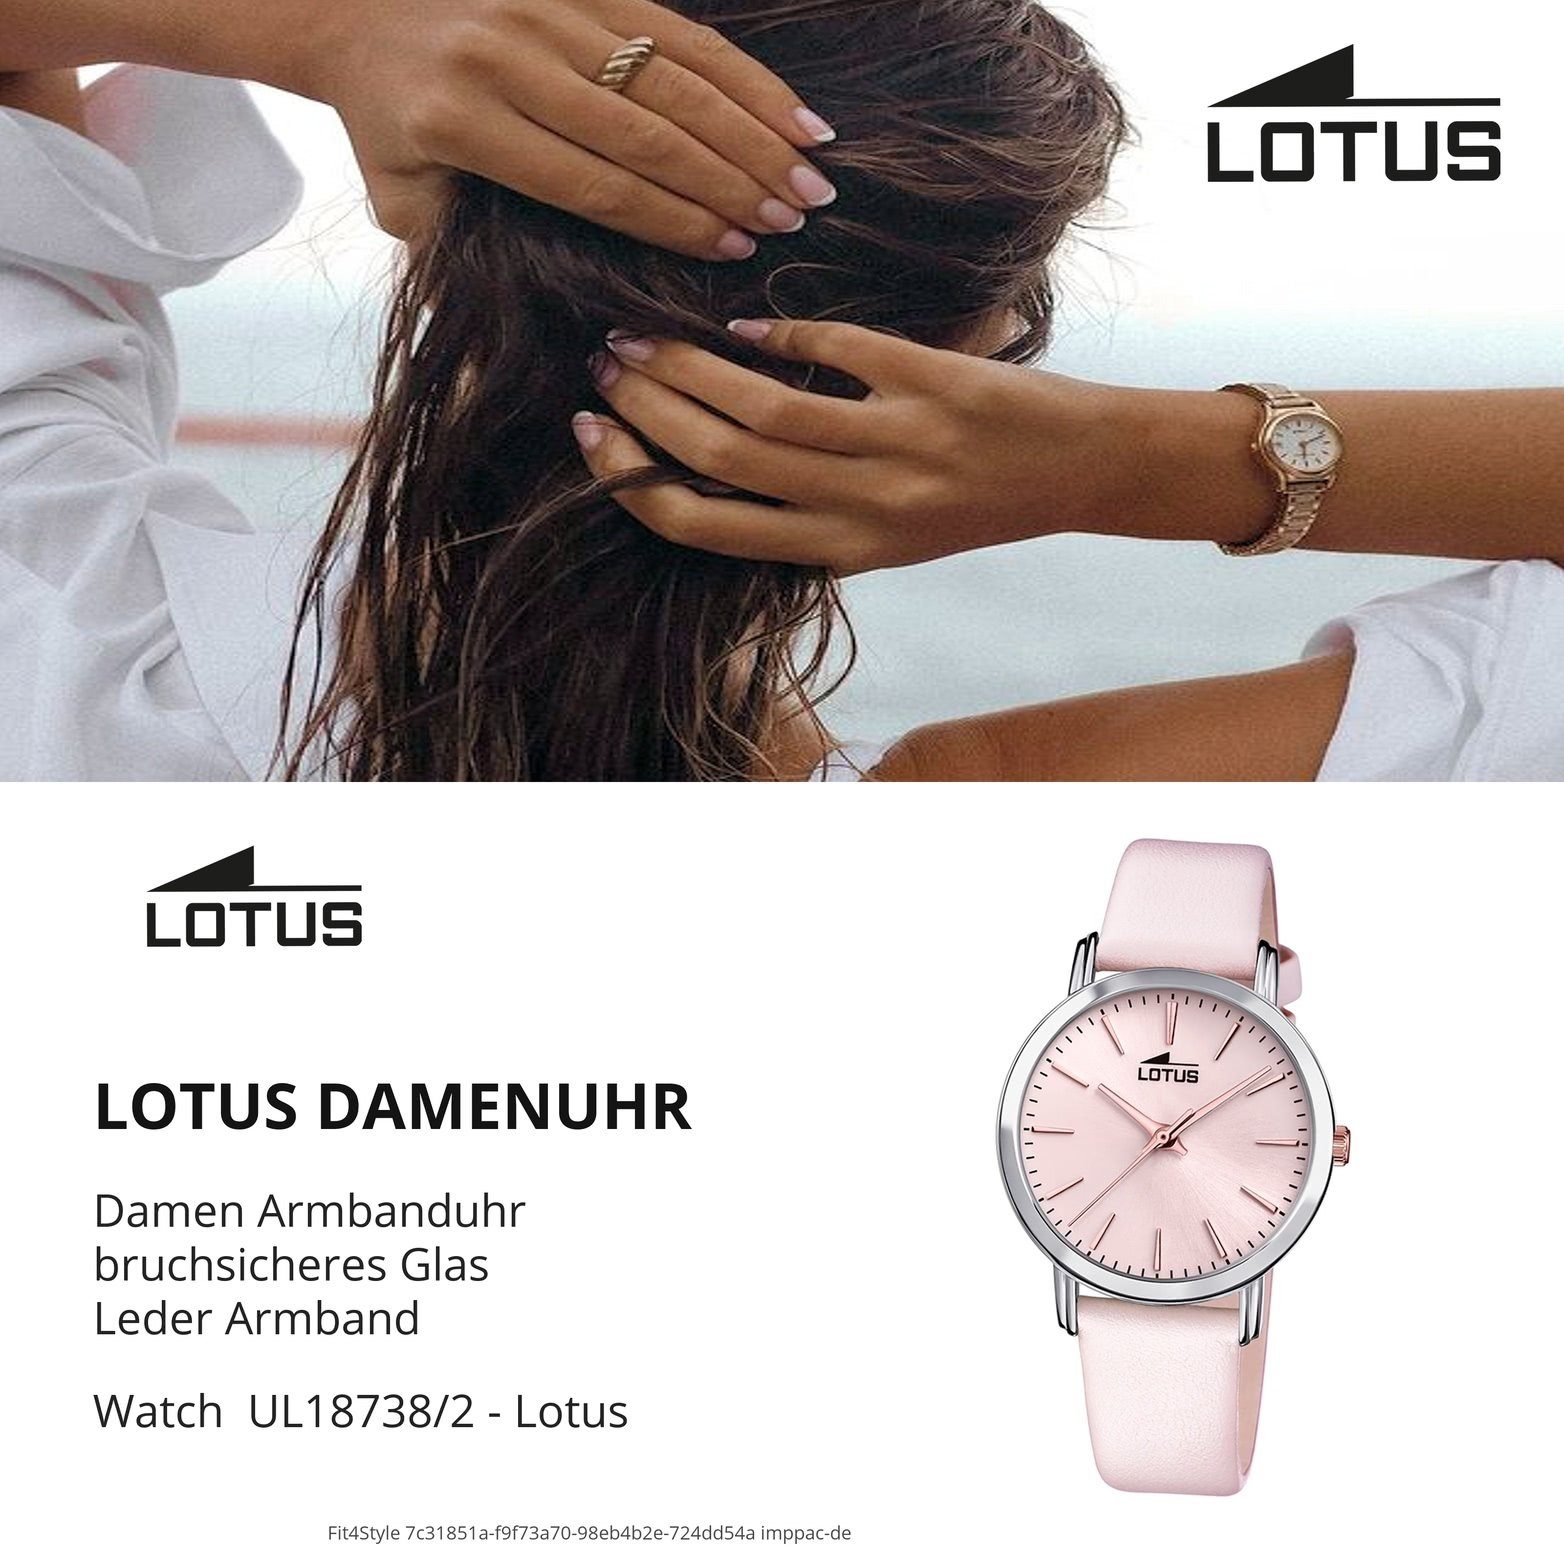 Damen Uhr Lotus mittel Quarzuhr Fashion- rundes Lederarmband, (ca. 18738/2, Damenuhr 33mm), Gehäuse, Lotus Leder Analog mit